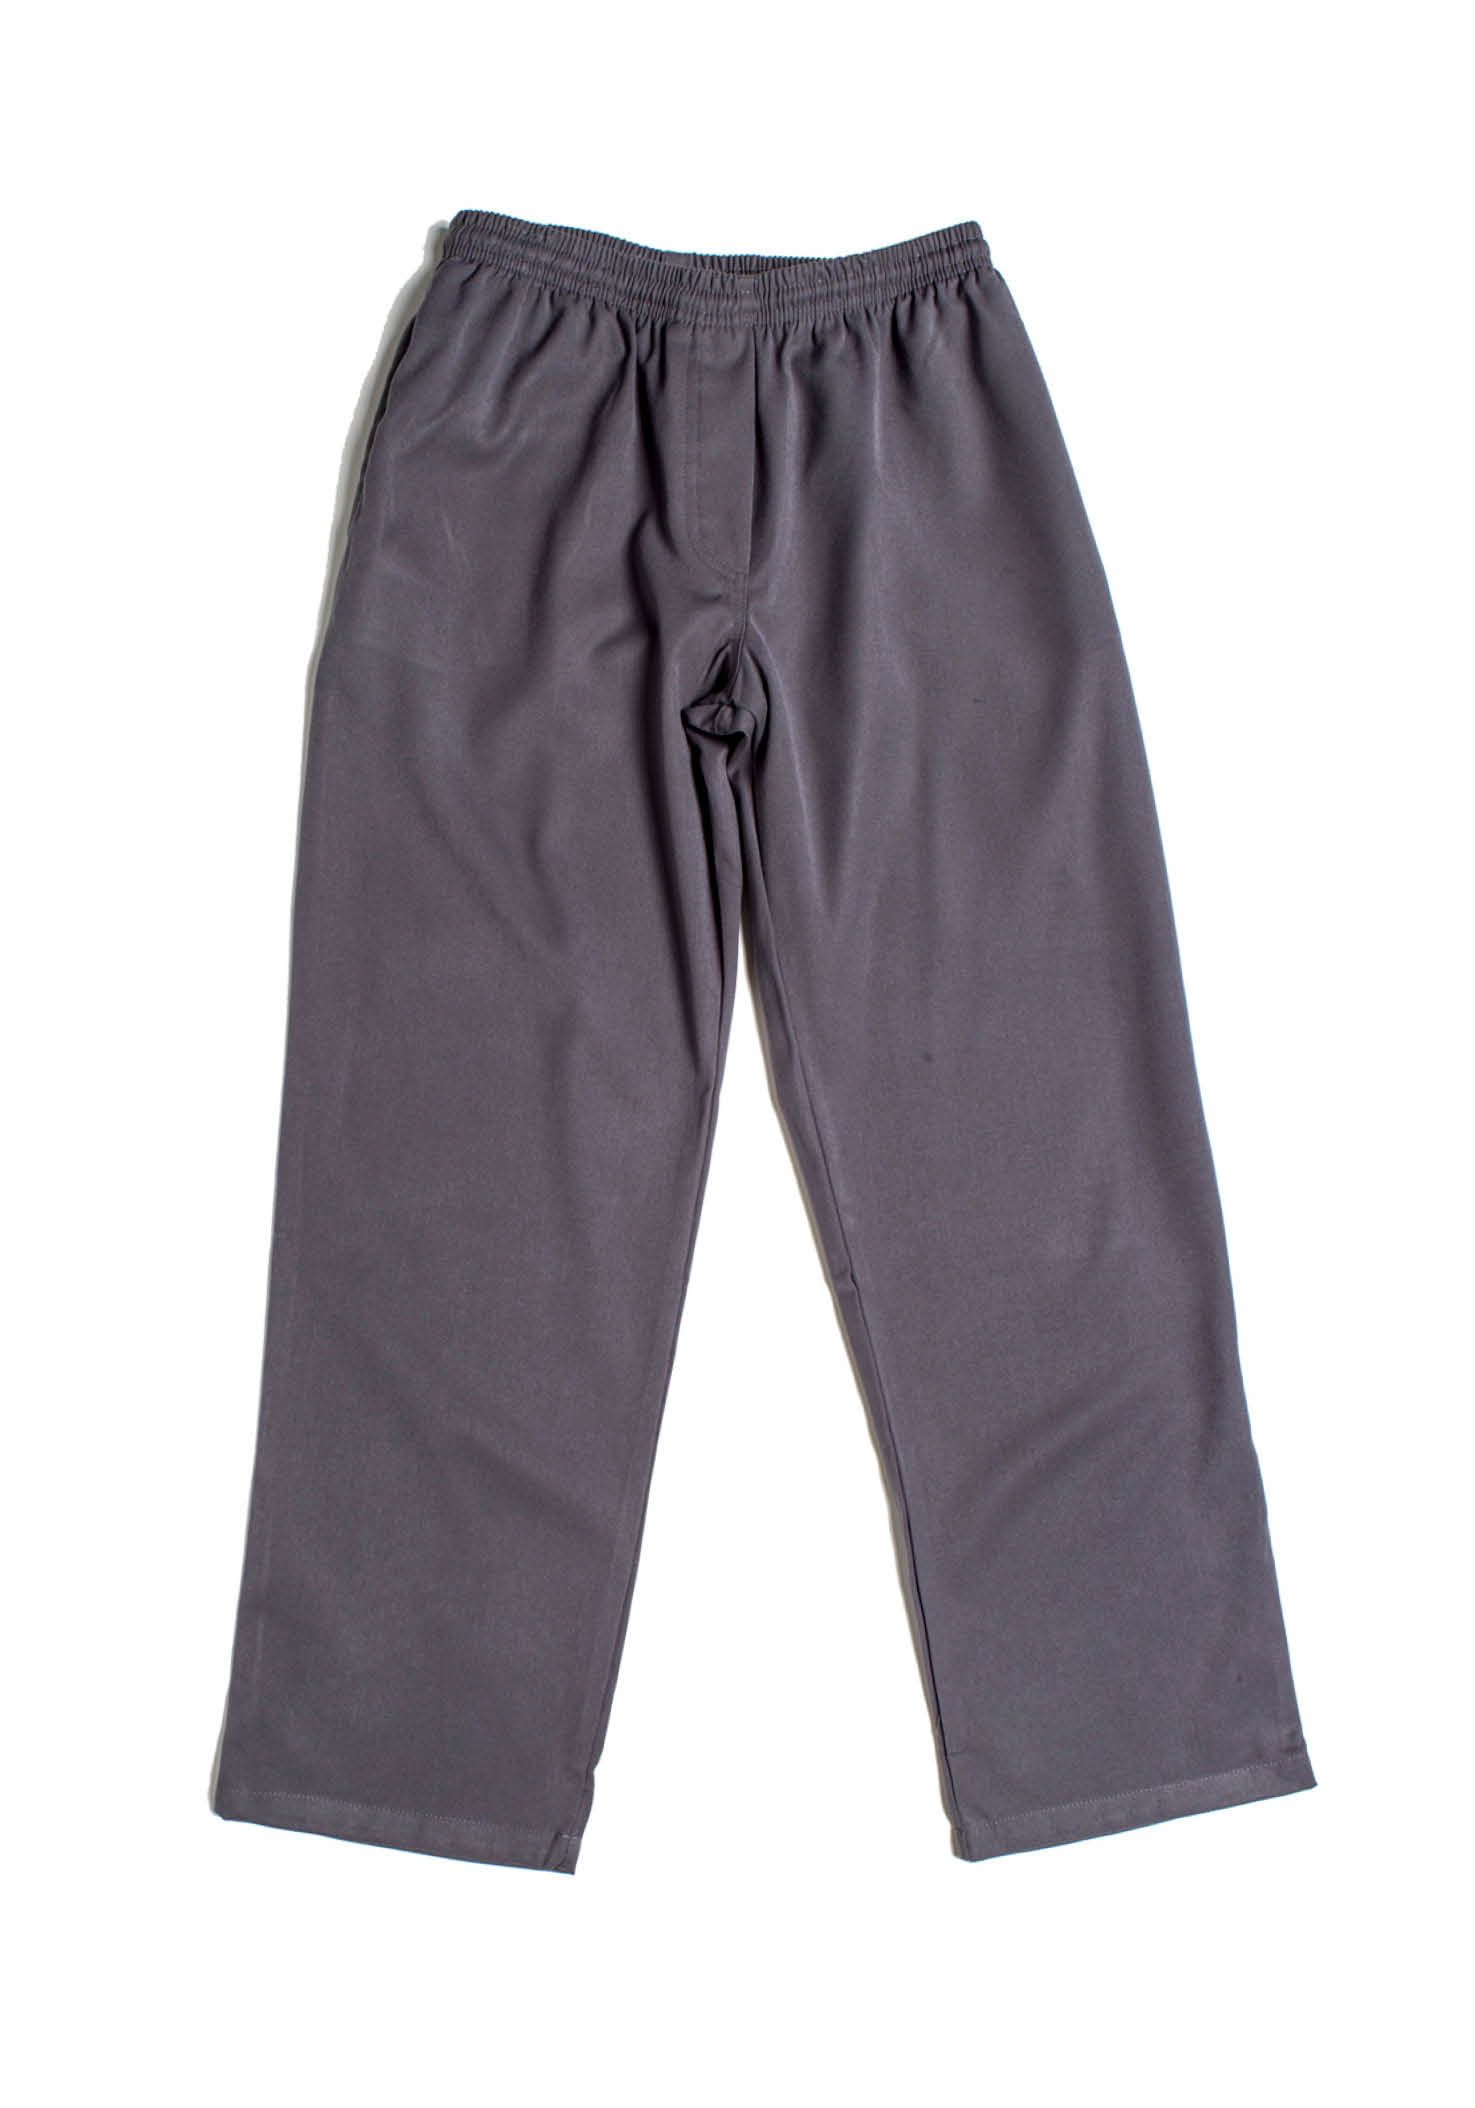 Manly Selective Boys Grey Gabardine Pants With Elastic Waist | Shop at ...